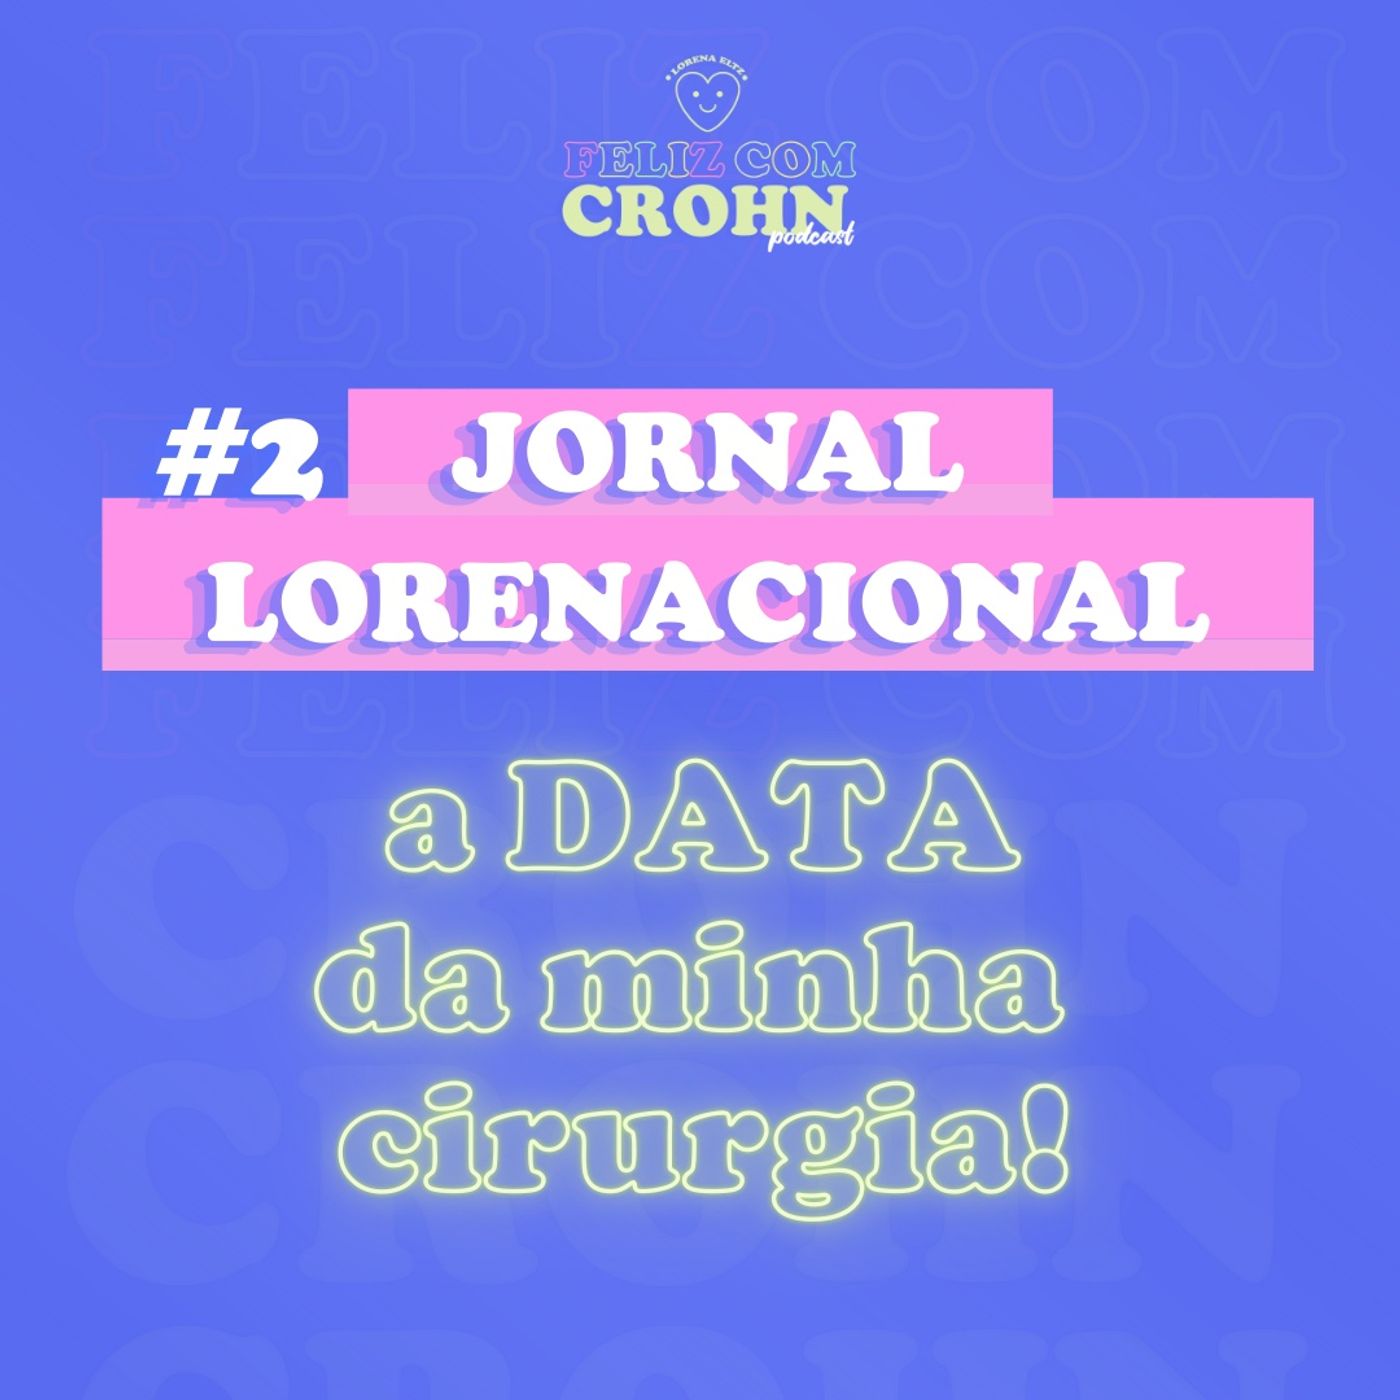 JORNAL LORENACIONAL 2 - O DIA DA MINHA CIRURGIA (vai ser 27.07)